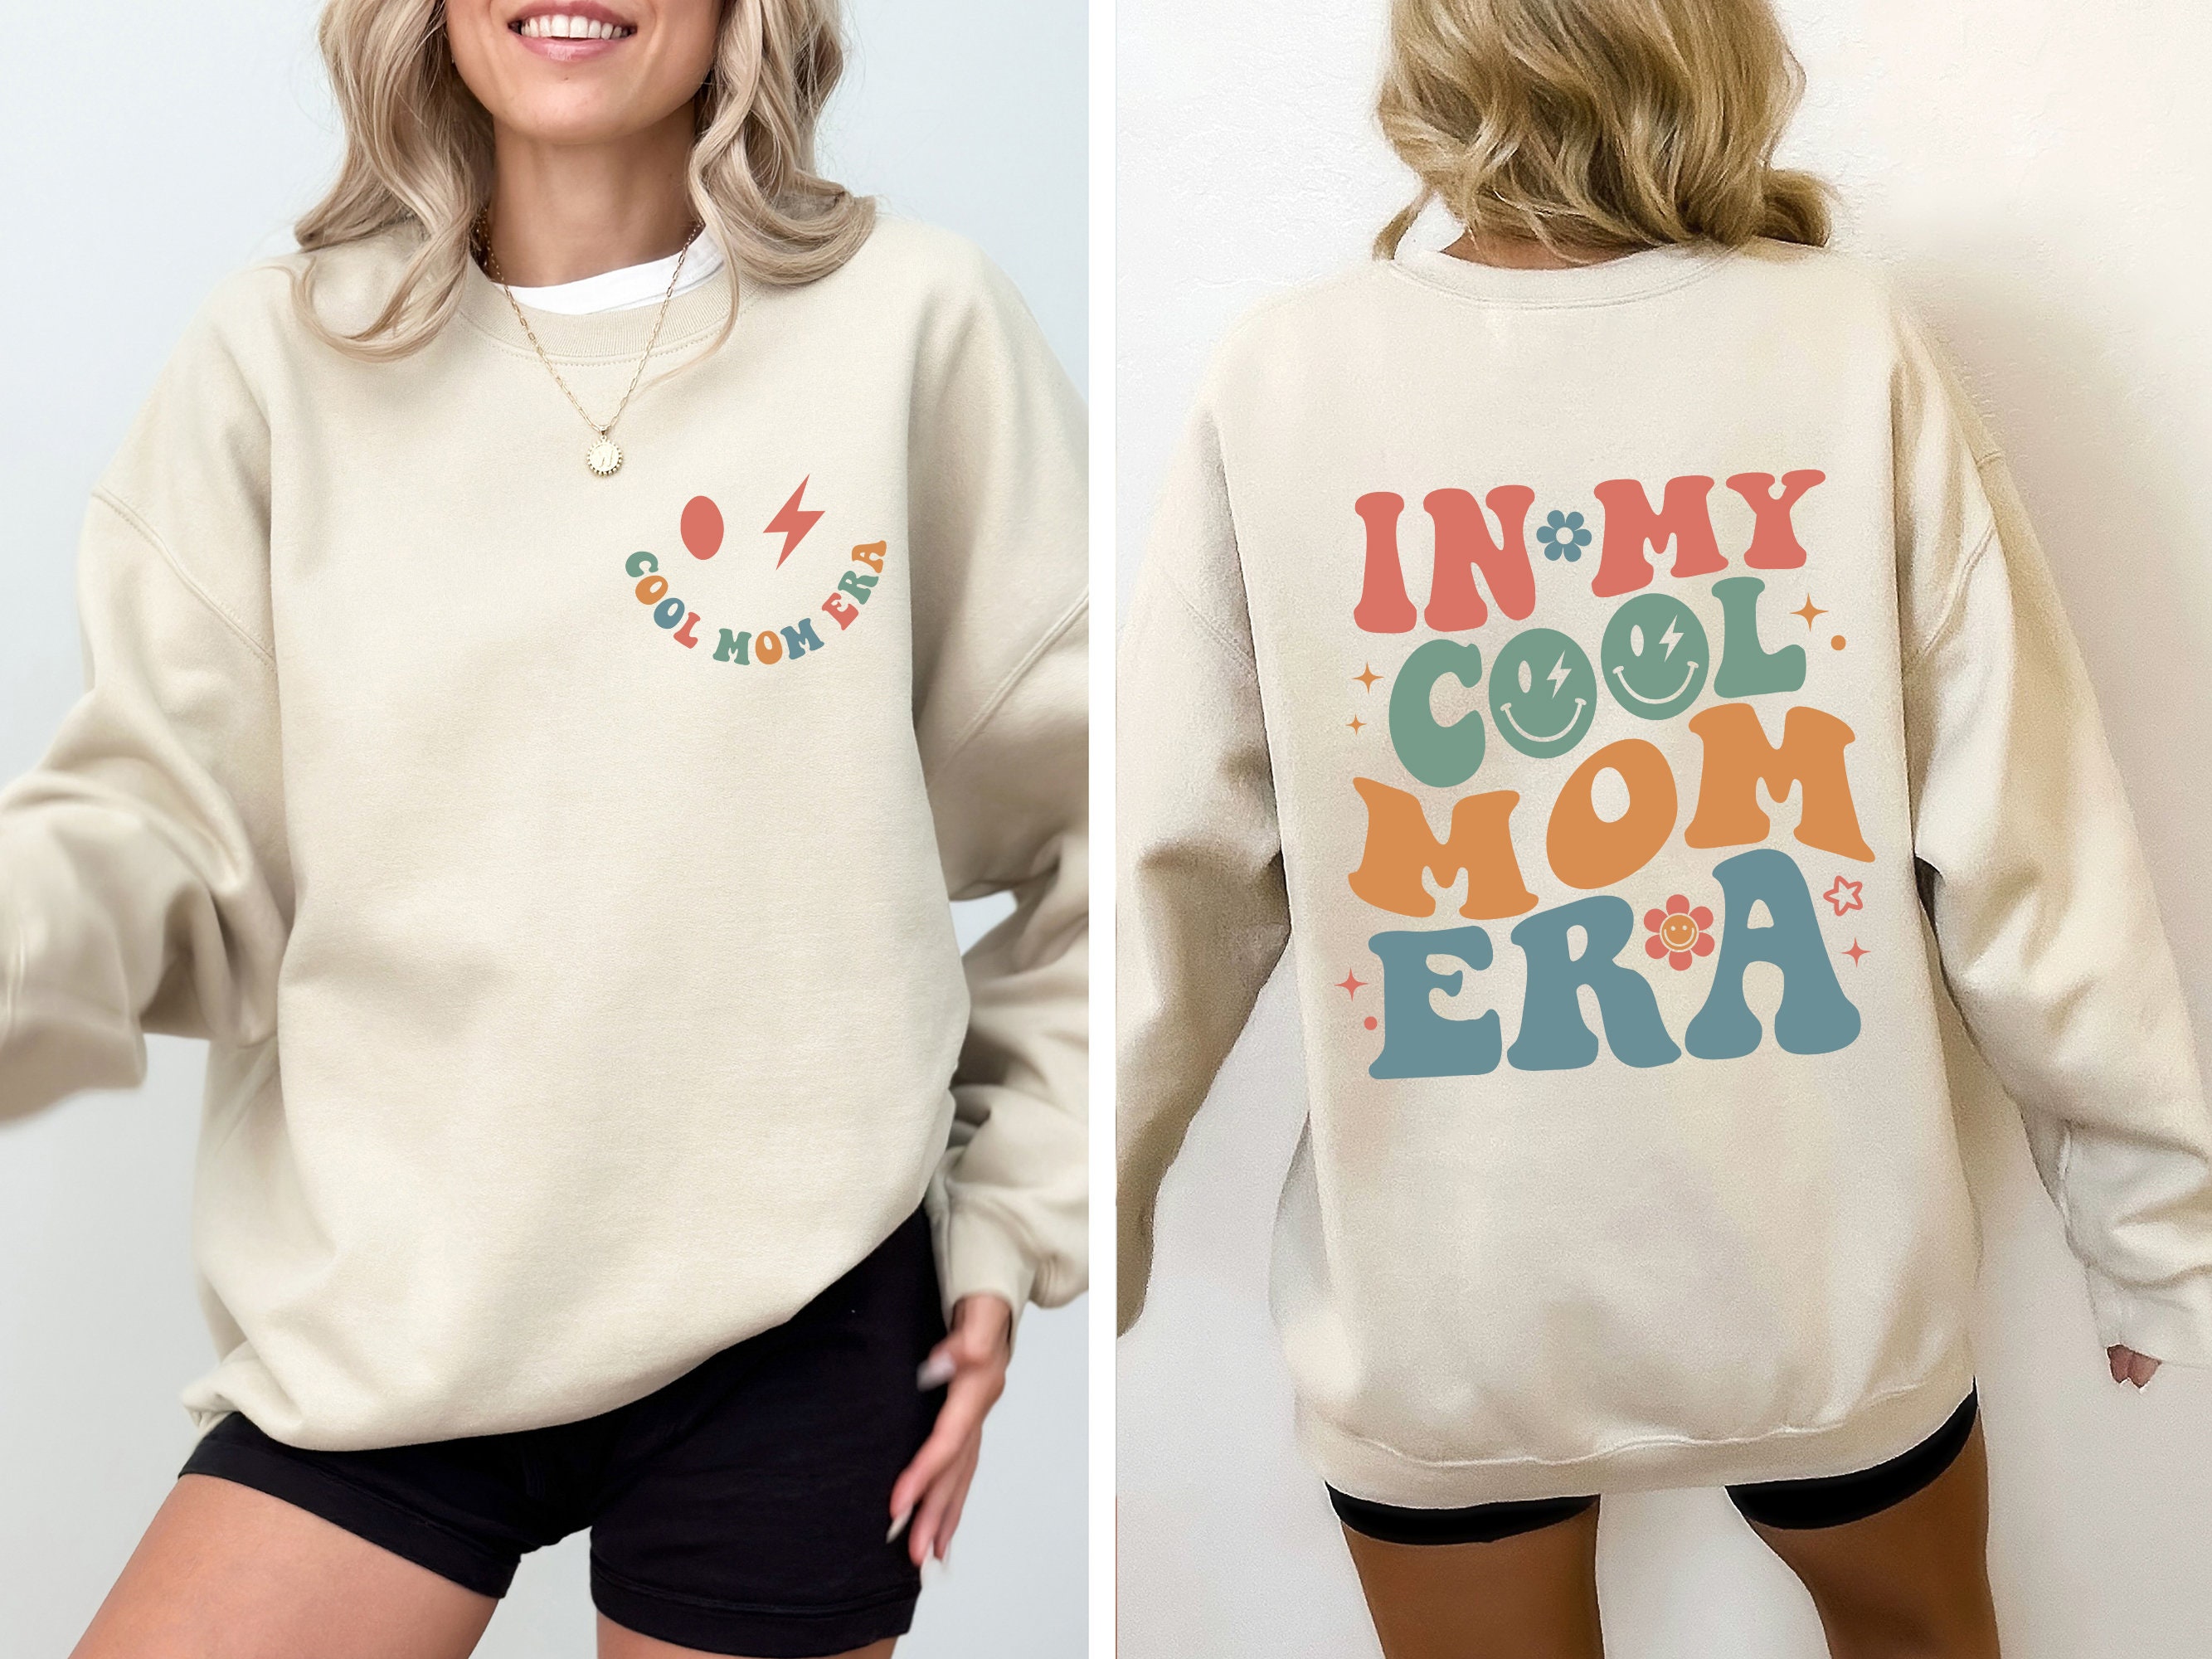 Discover In My Cool Mom Era 母の時代に 男女兼用 スウェット ニット セーター お母さんへのギフト 国際女性デープレゼント Gift for Mama